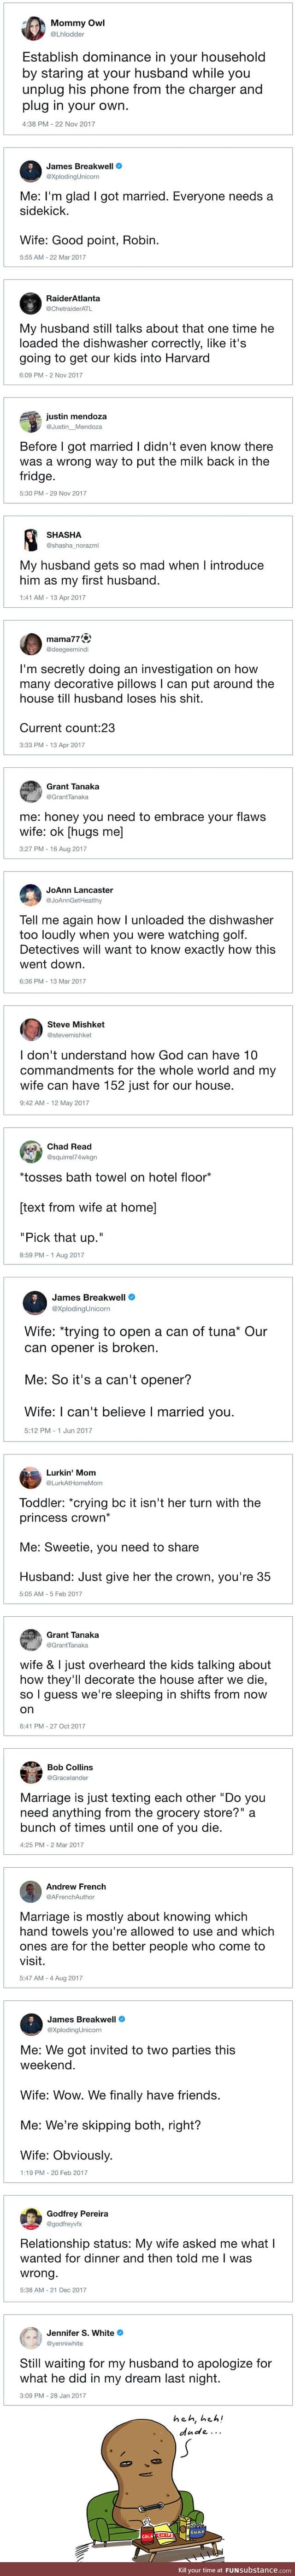 15+ hilarious marriage tweets in 2017